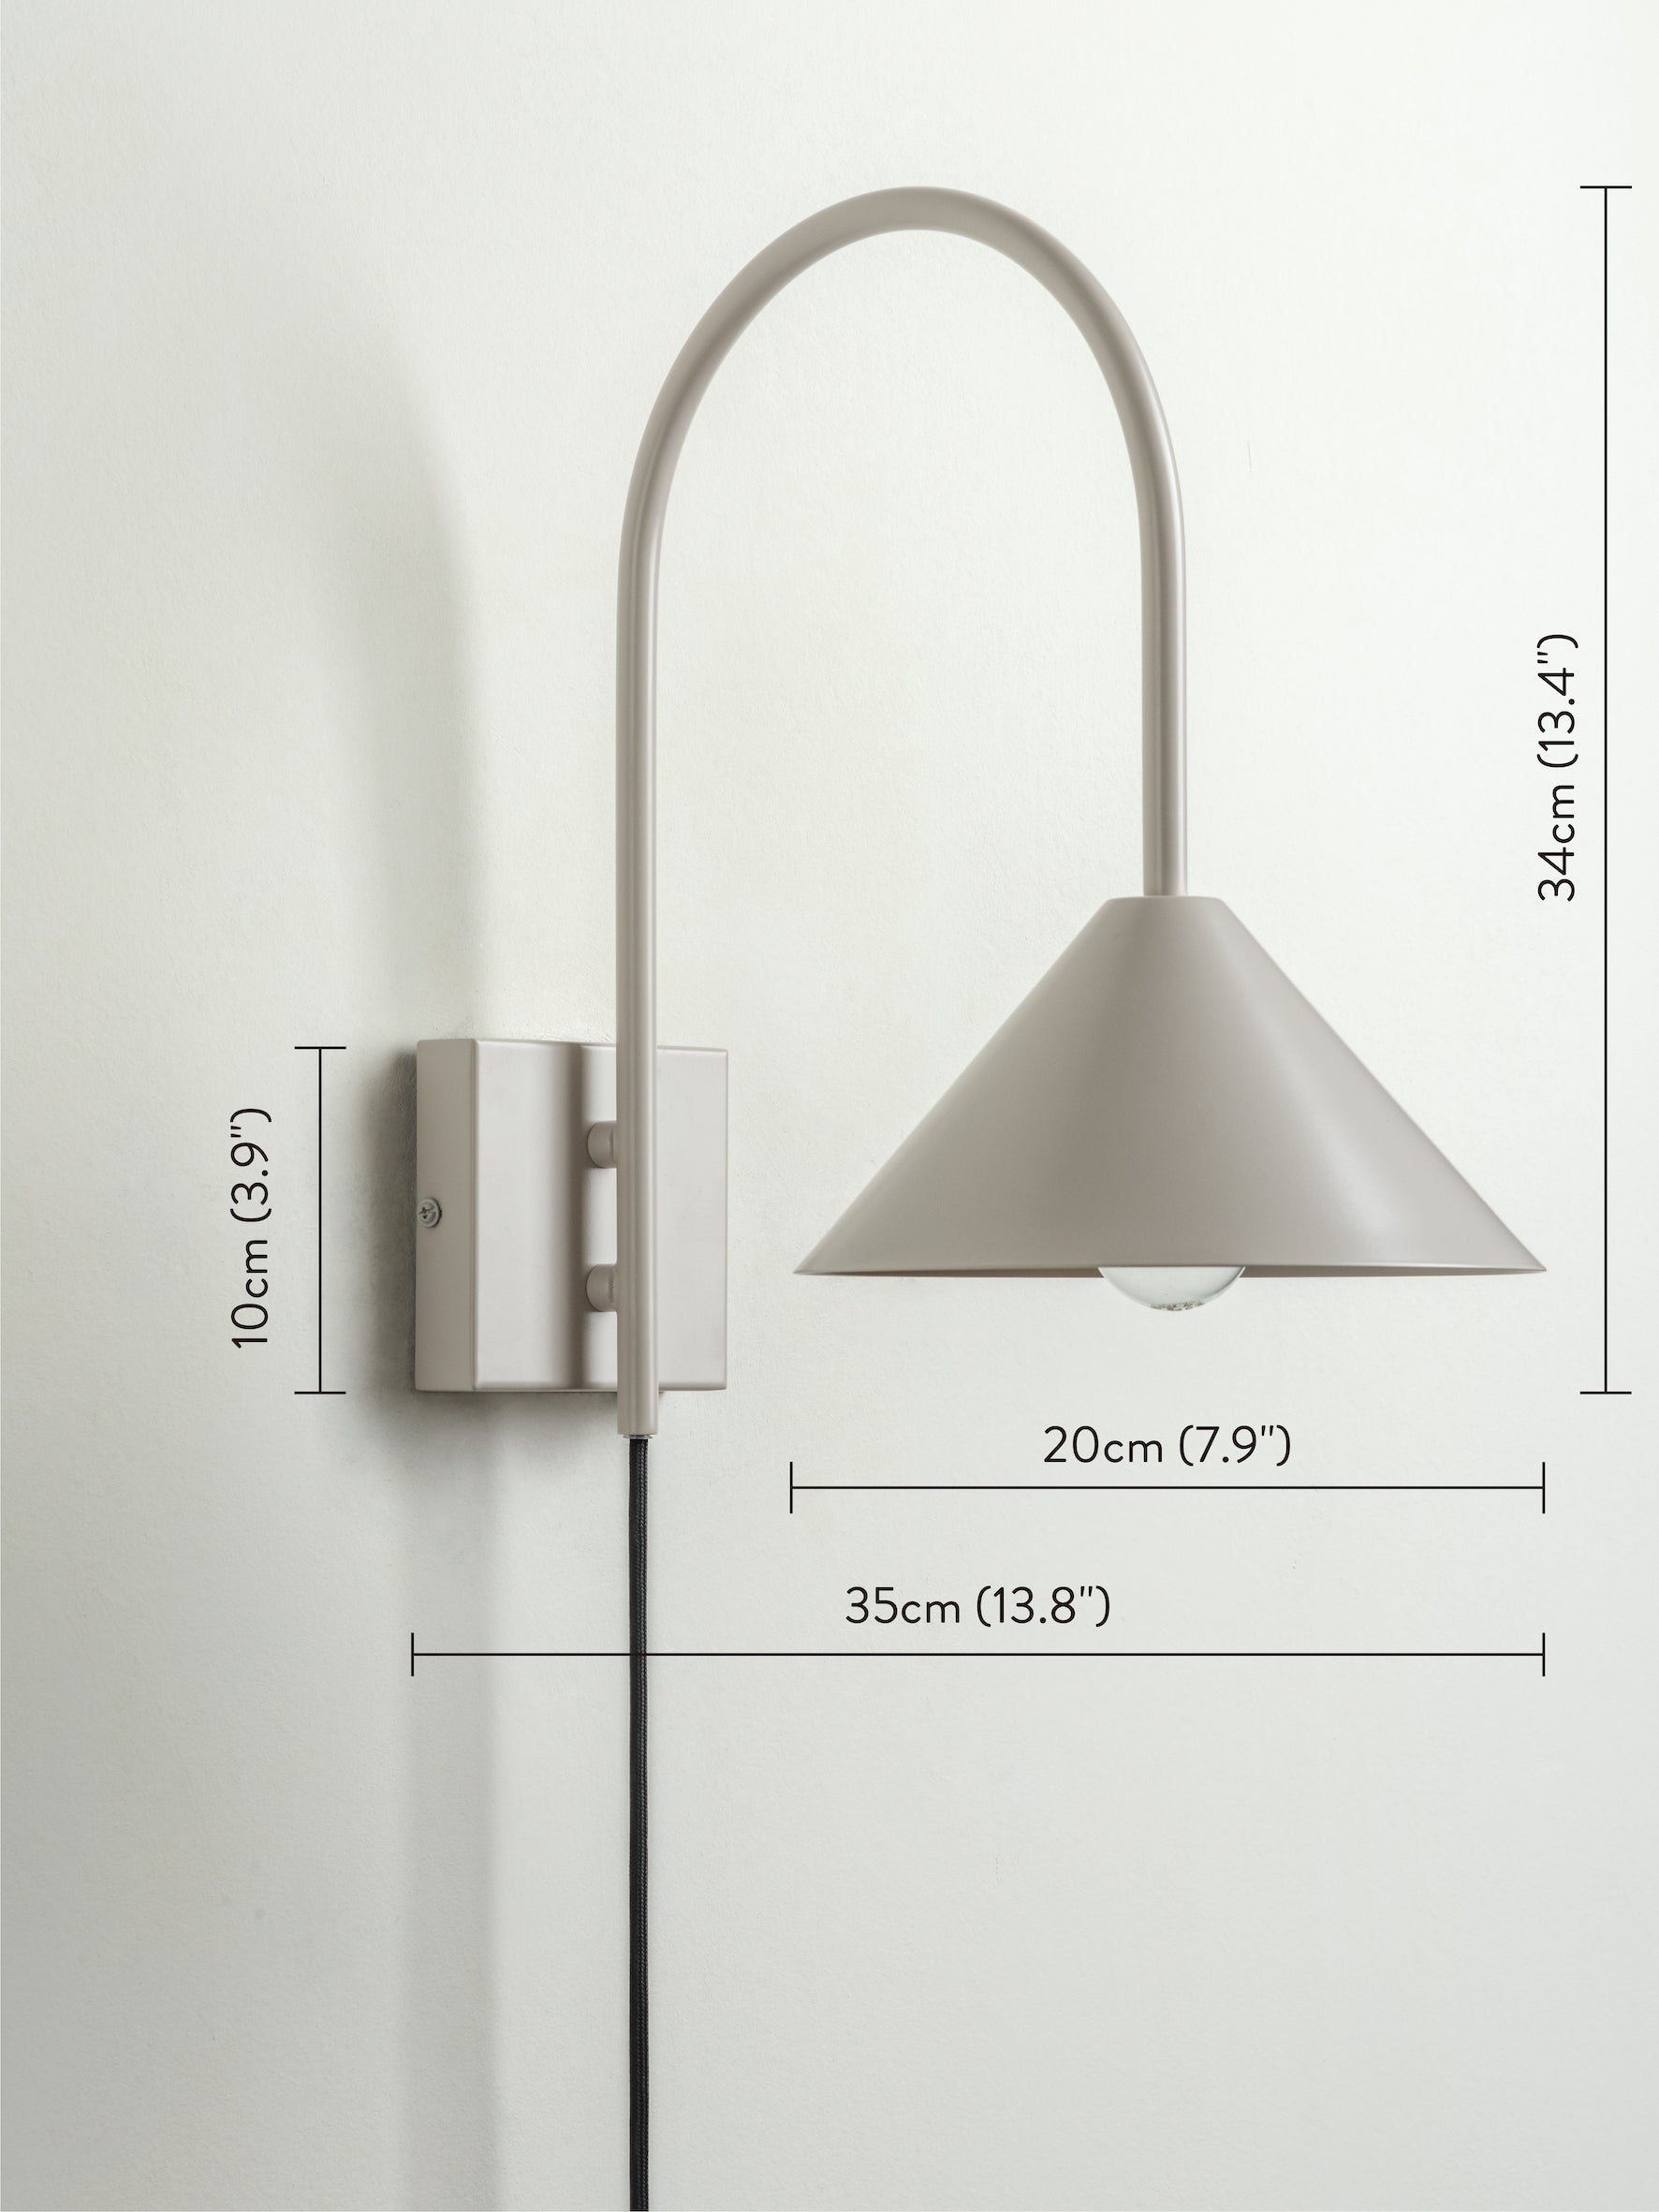 Orta - 1 light warm white cone wall light | Wall Light | Lights & Lamps | UK | Modern Affordable Designer Lighting